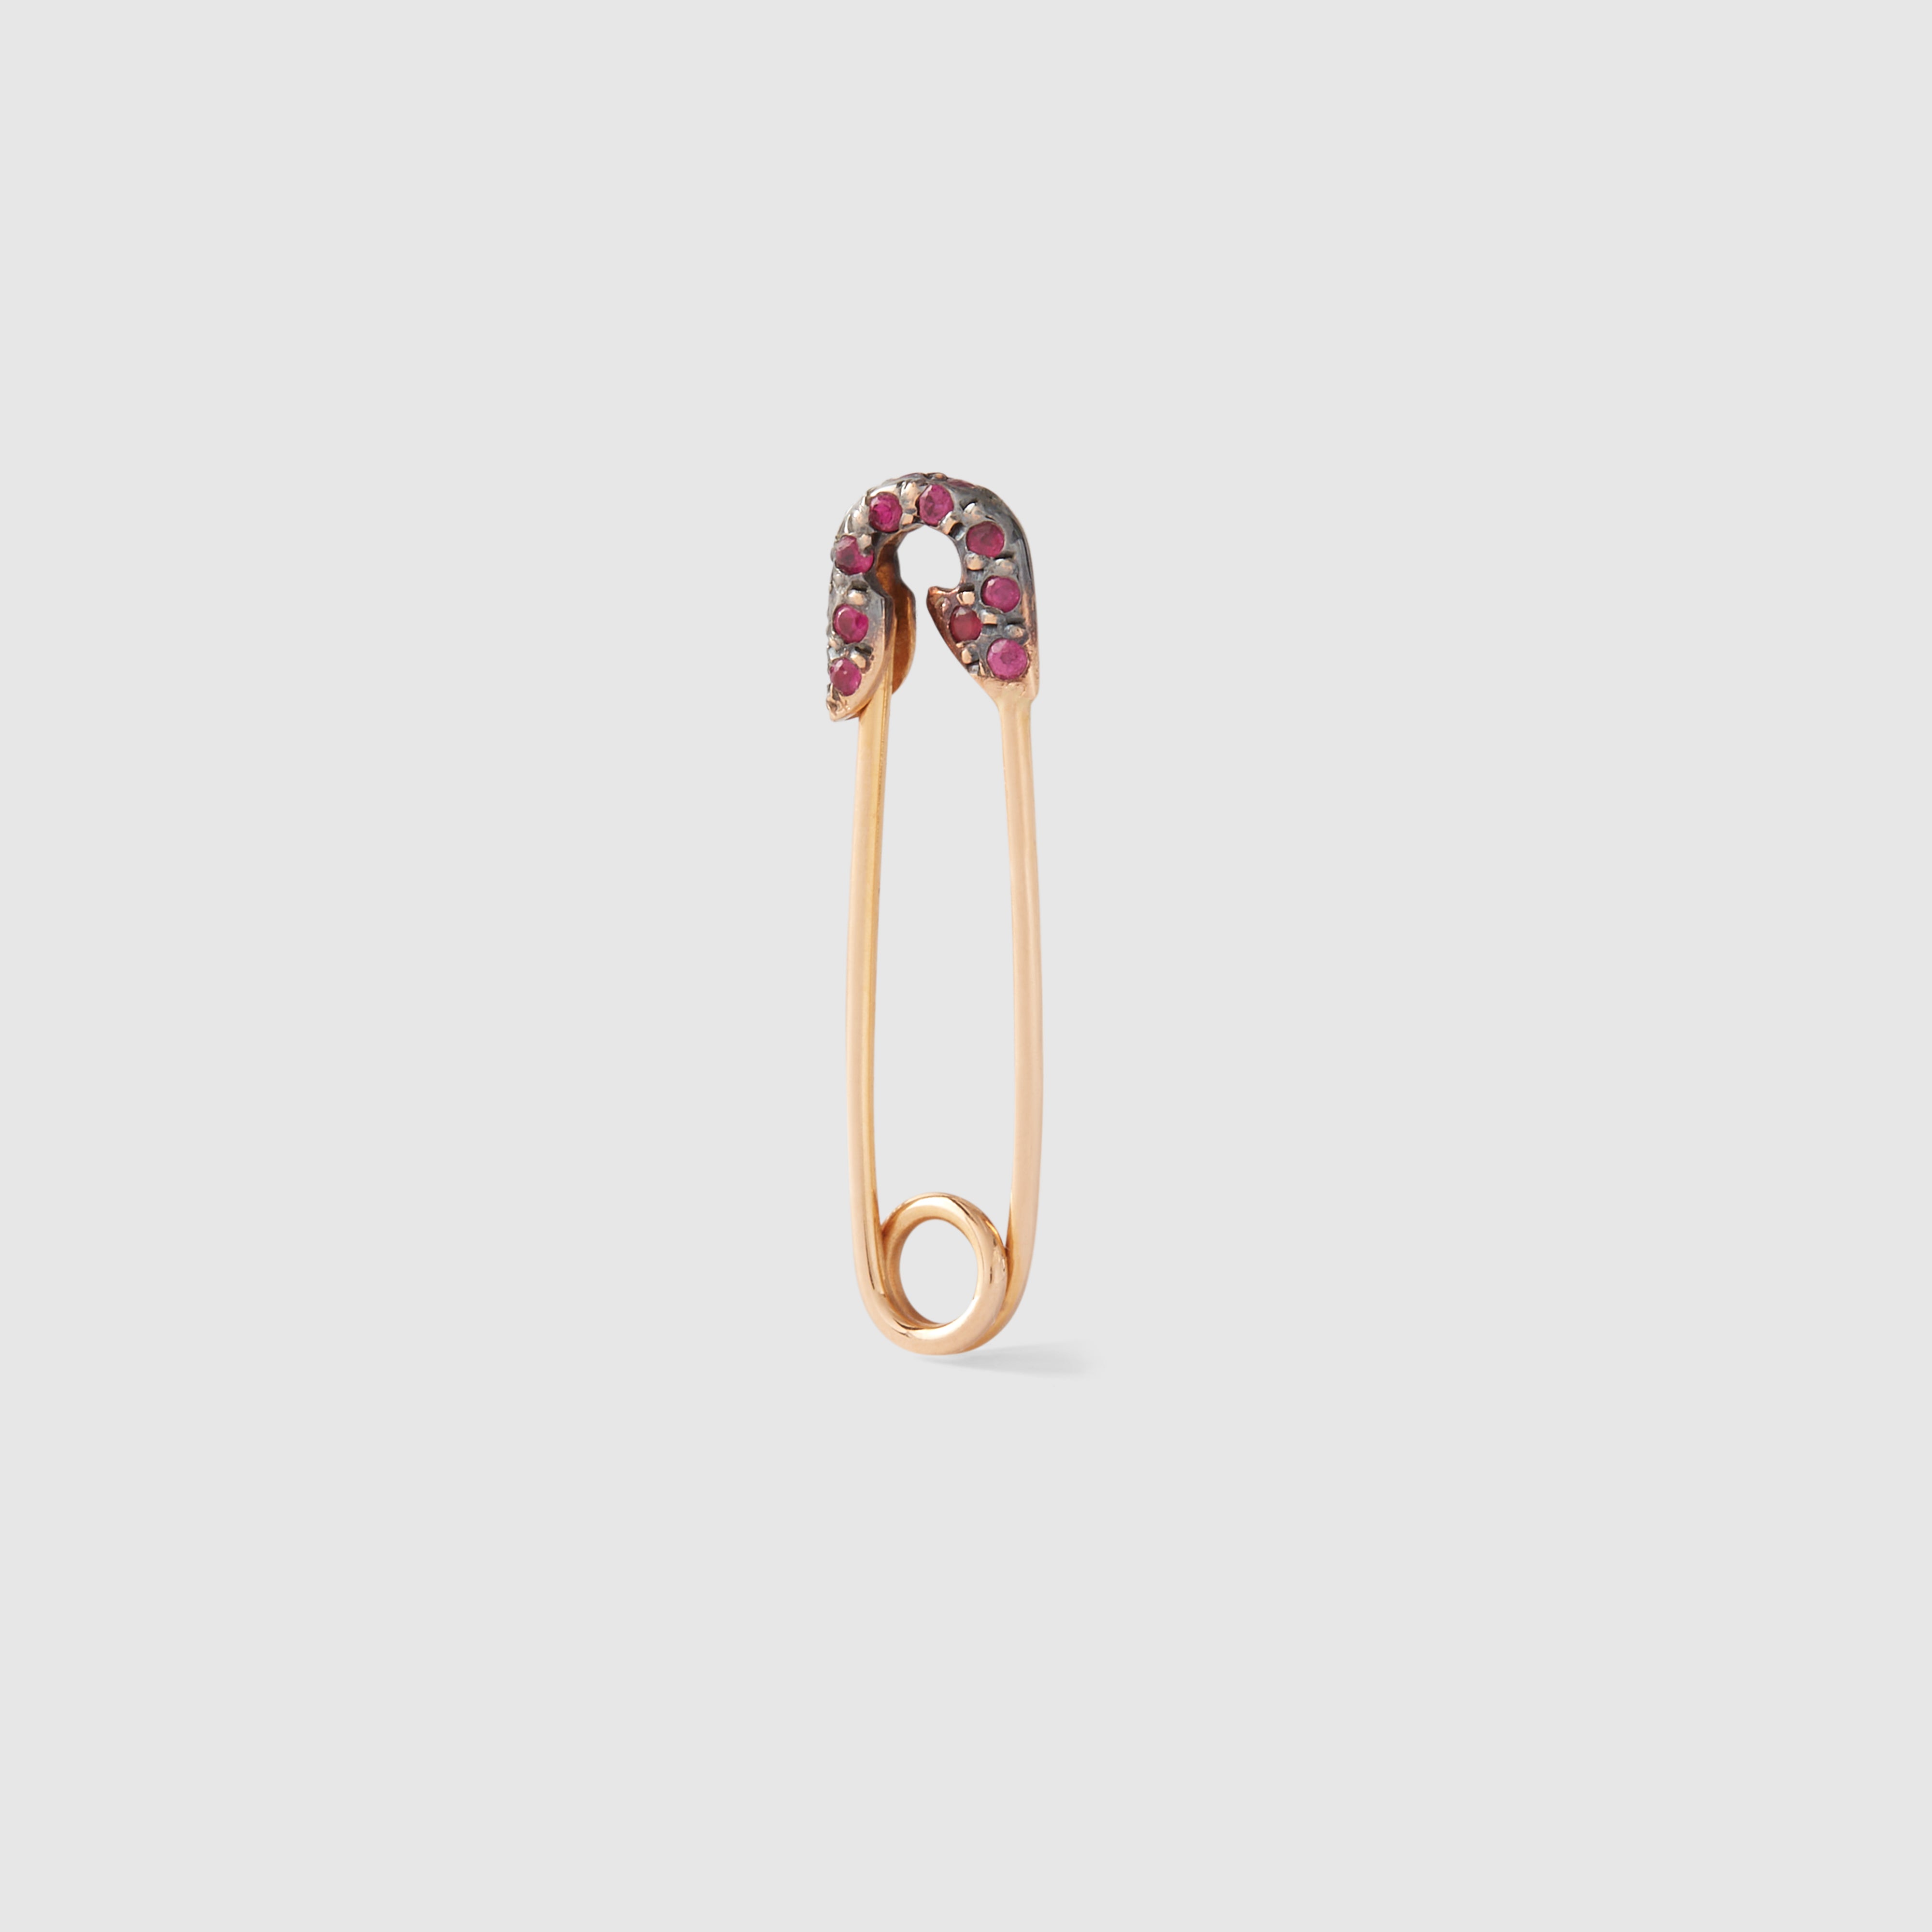 Ileana Makri - Safety Pin with rubies - (Rose Gold)